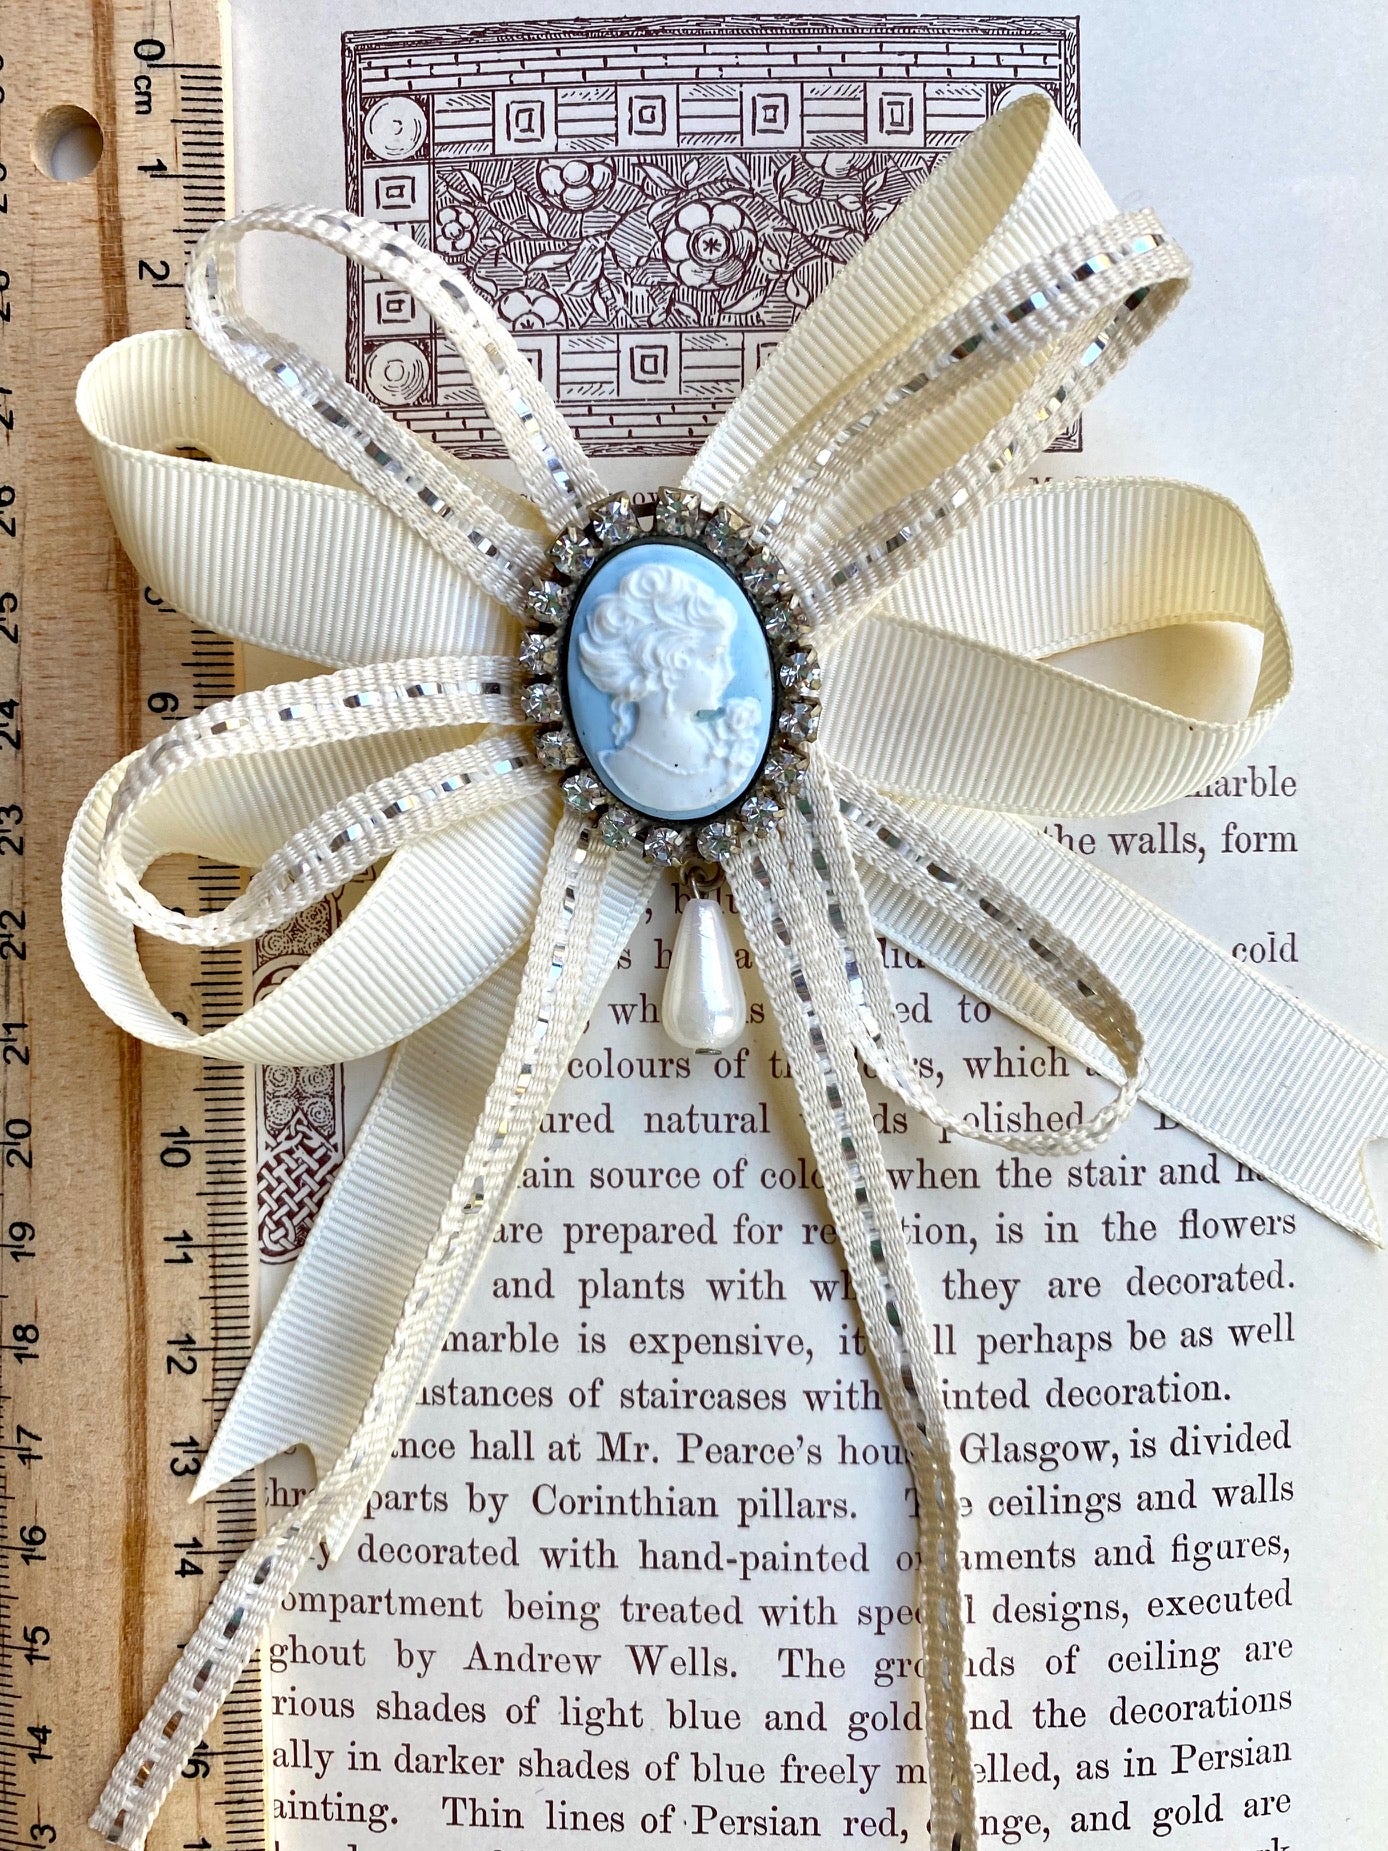 Vintage cameo and ribbon brooch. – Miss Rose Sister Violet